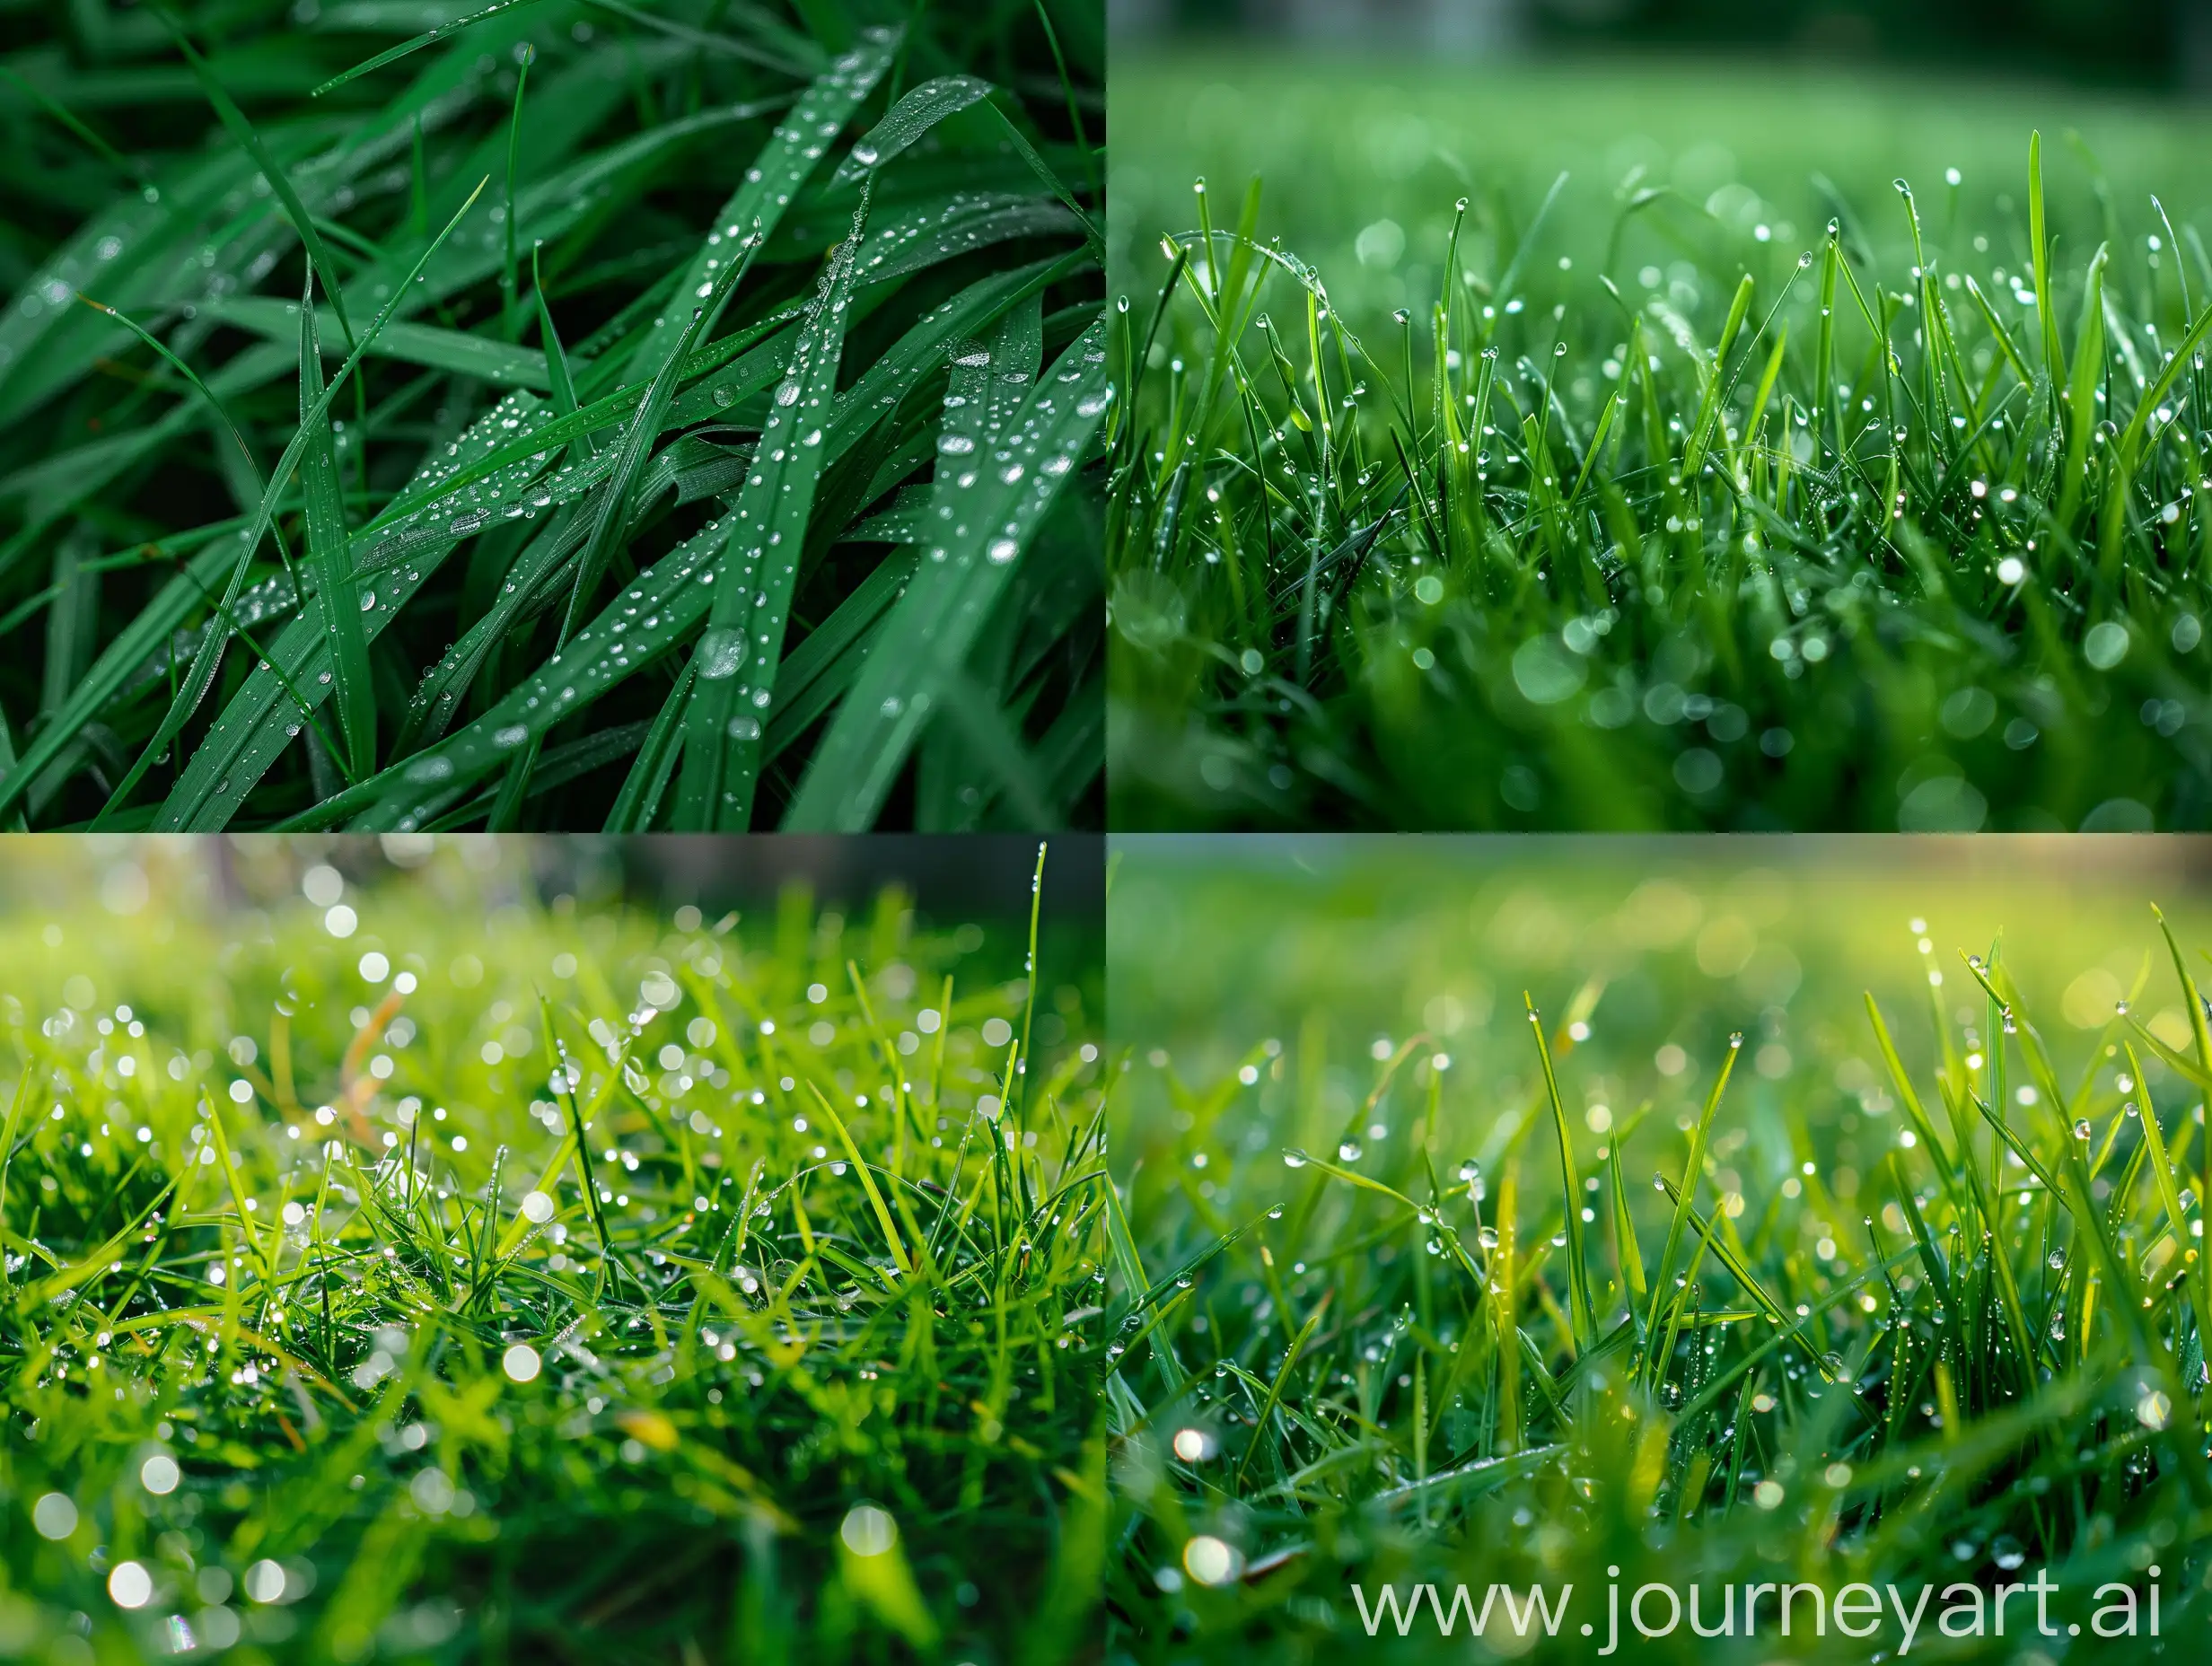 Refreshing-Water-Drops-Glistening-on-Vibrant-Green-Grass